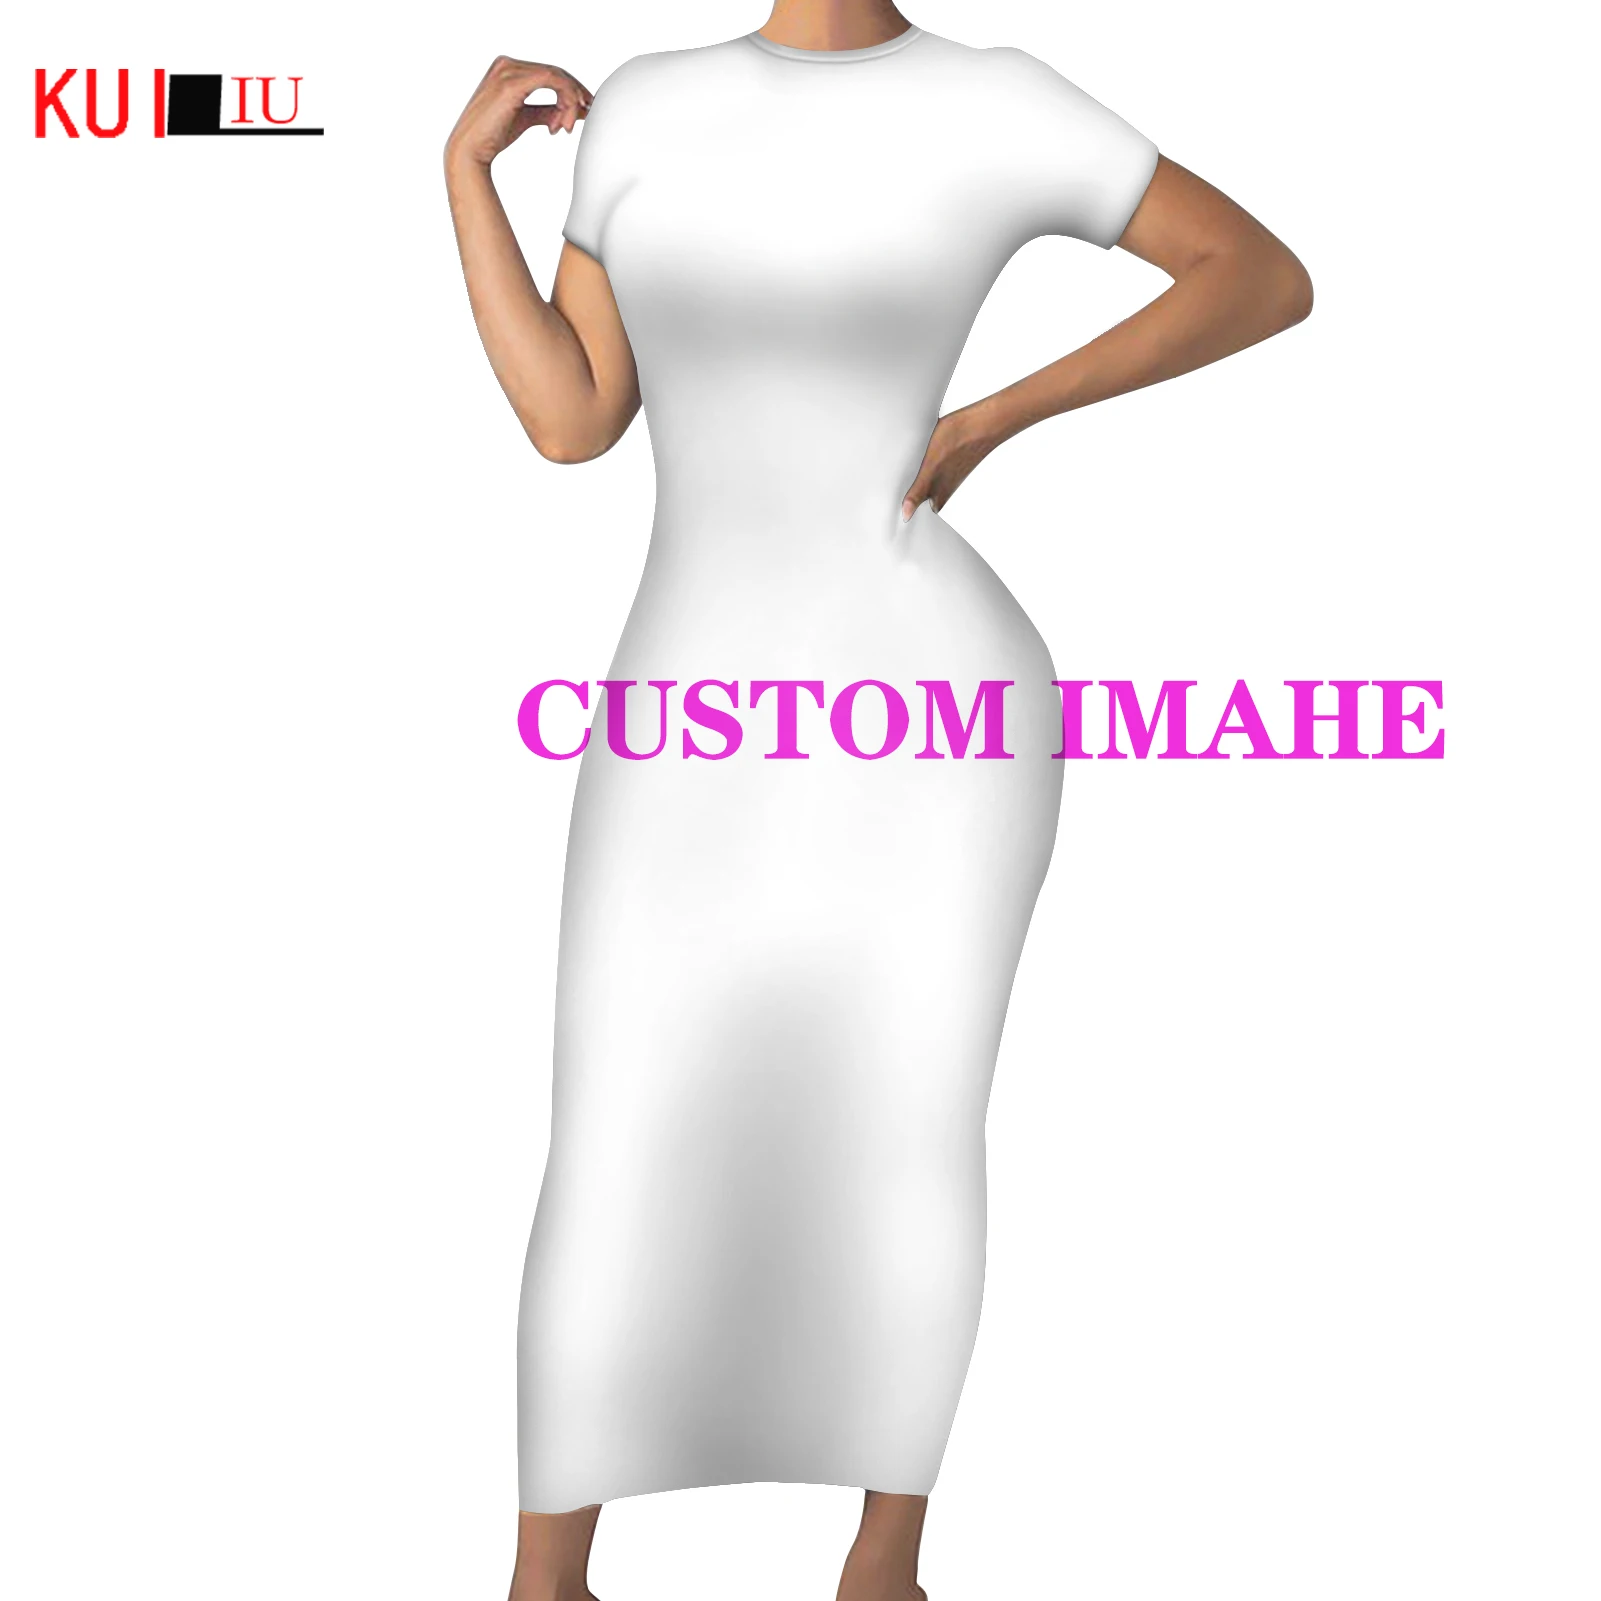 

Customize Image Fashion Trend Sexy Women KUILIU Custom Short Tops Casual Dress Round Neck Office Ladies Pencil Vestido Dropship